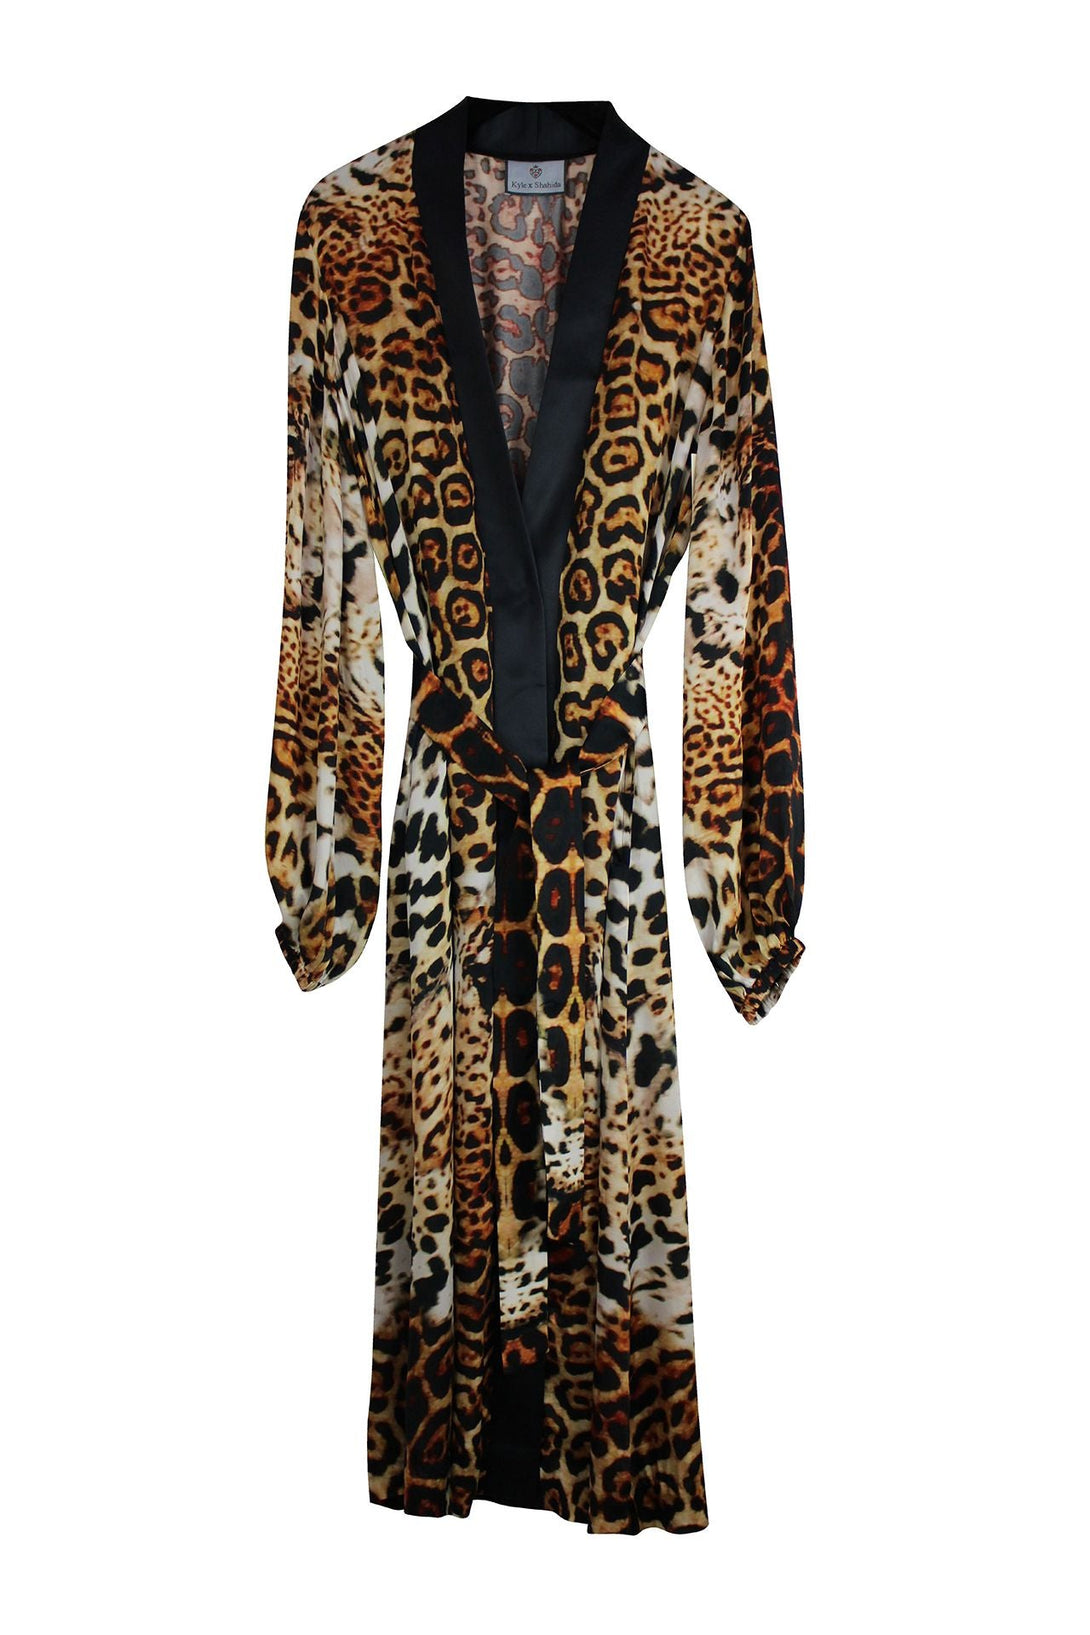 "Shahida Parides" "silk leopard robe" "long kimono silk robe" "woman in silk robe" "silk kimono" "robe dress silk"